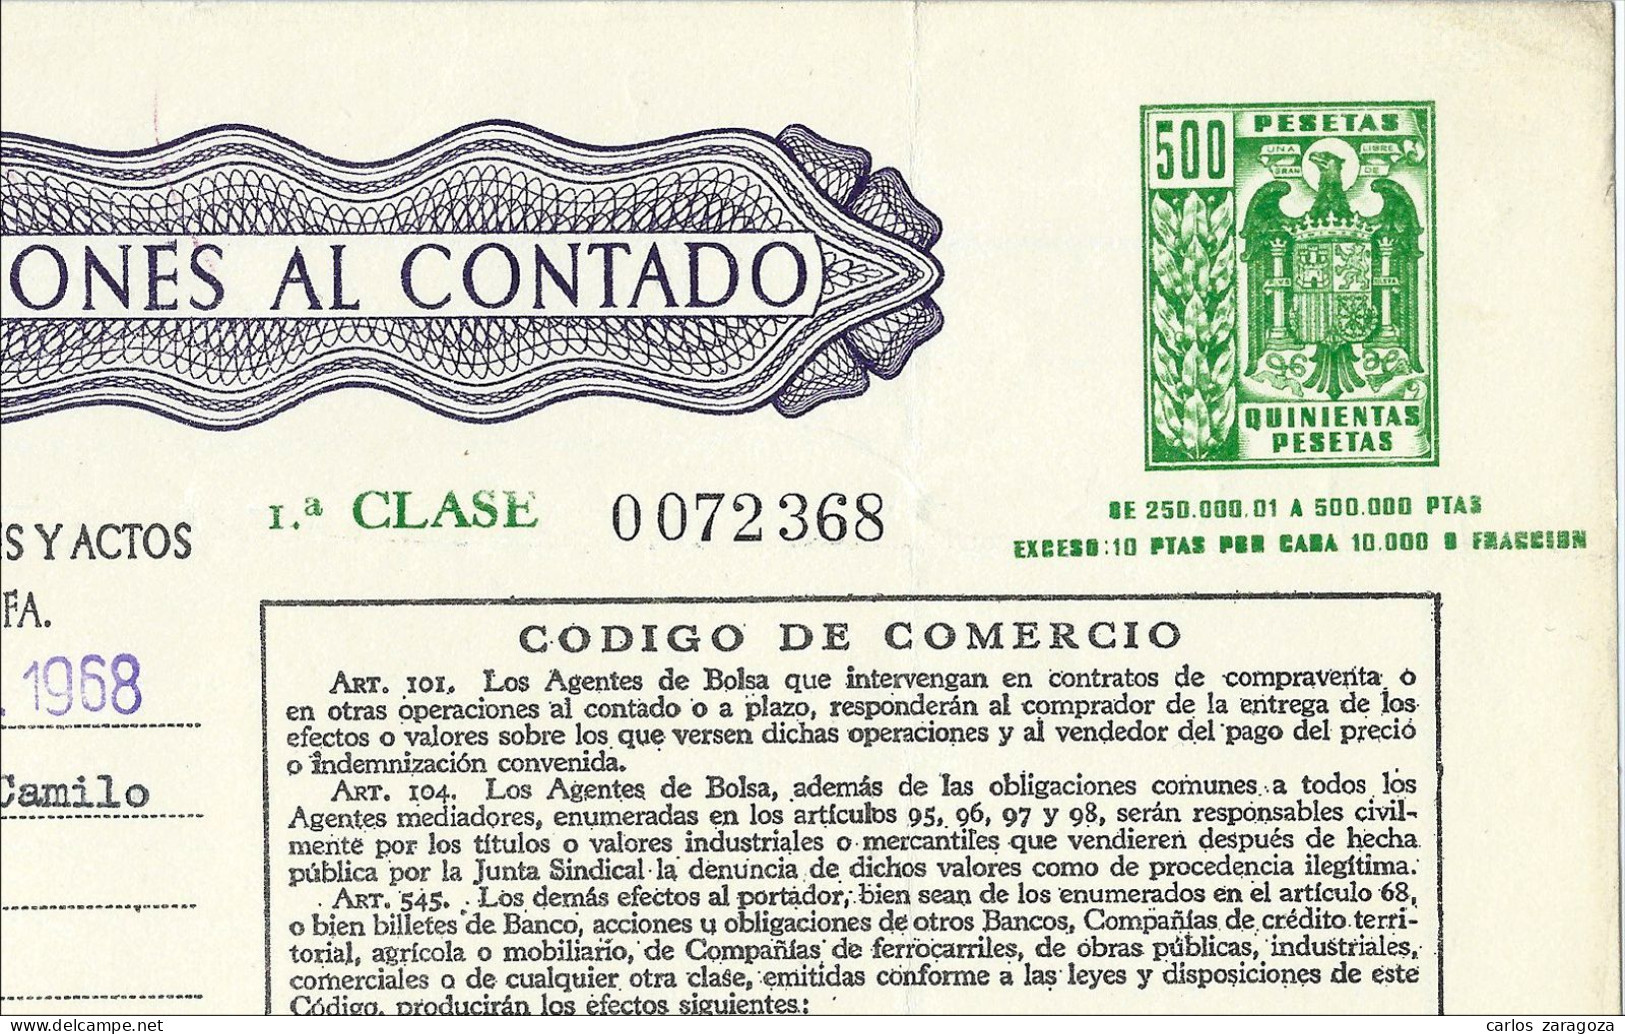 Póliza De OPERACIONES AL CONTADO—Timbre 1a Clase 500 Ptas—Timbrología—Entero Fiscal 1968 - Fiscales